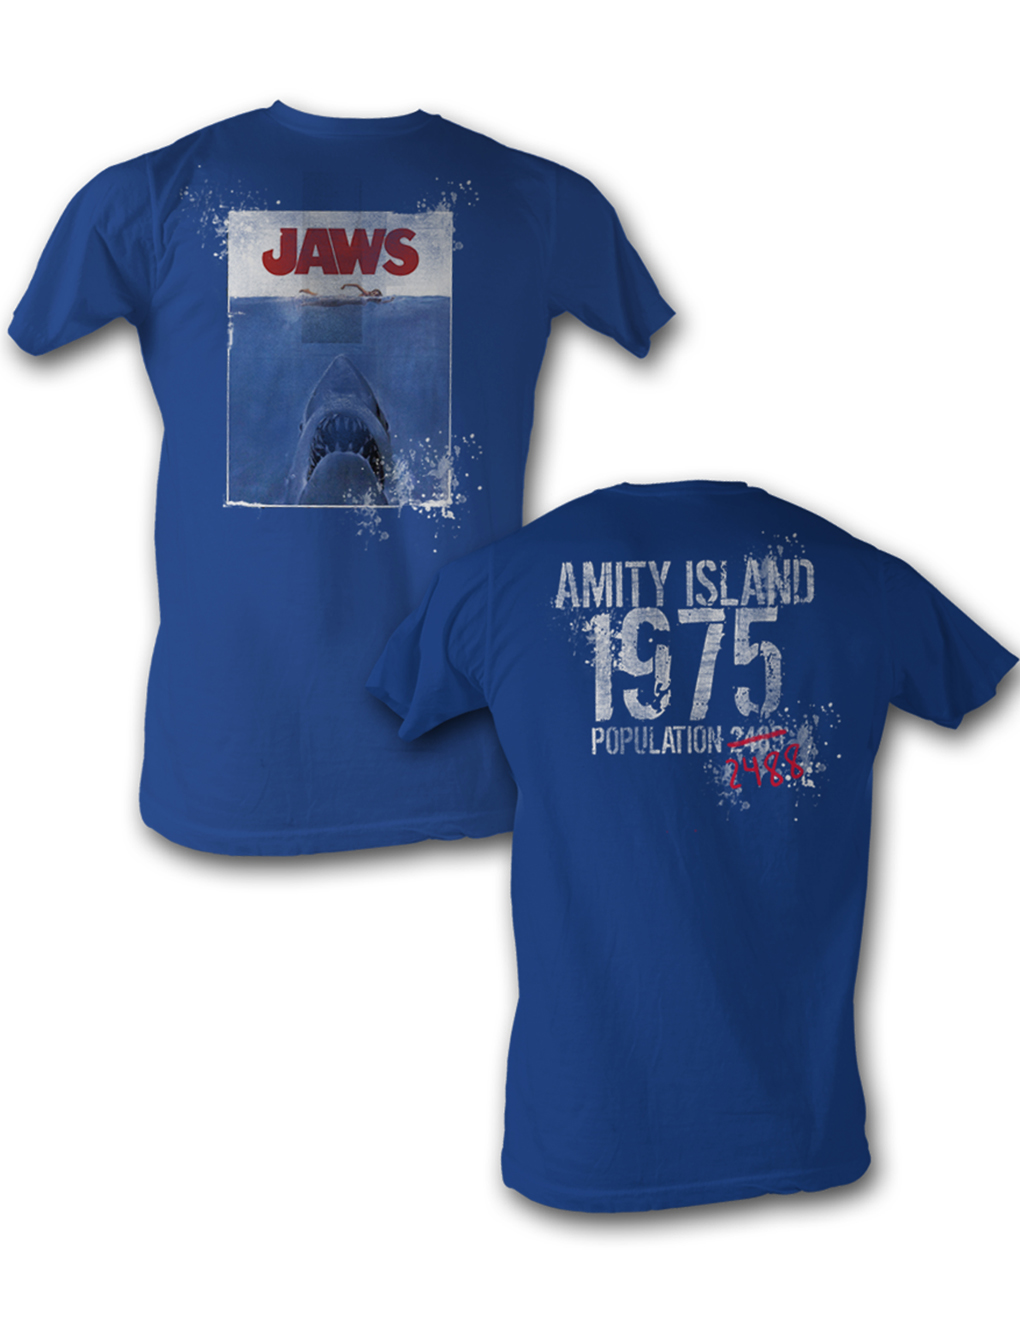 Jaws: Amity Island Shirt